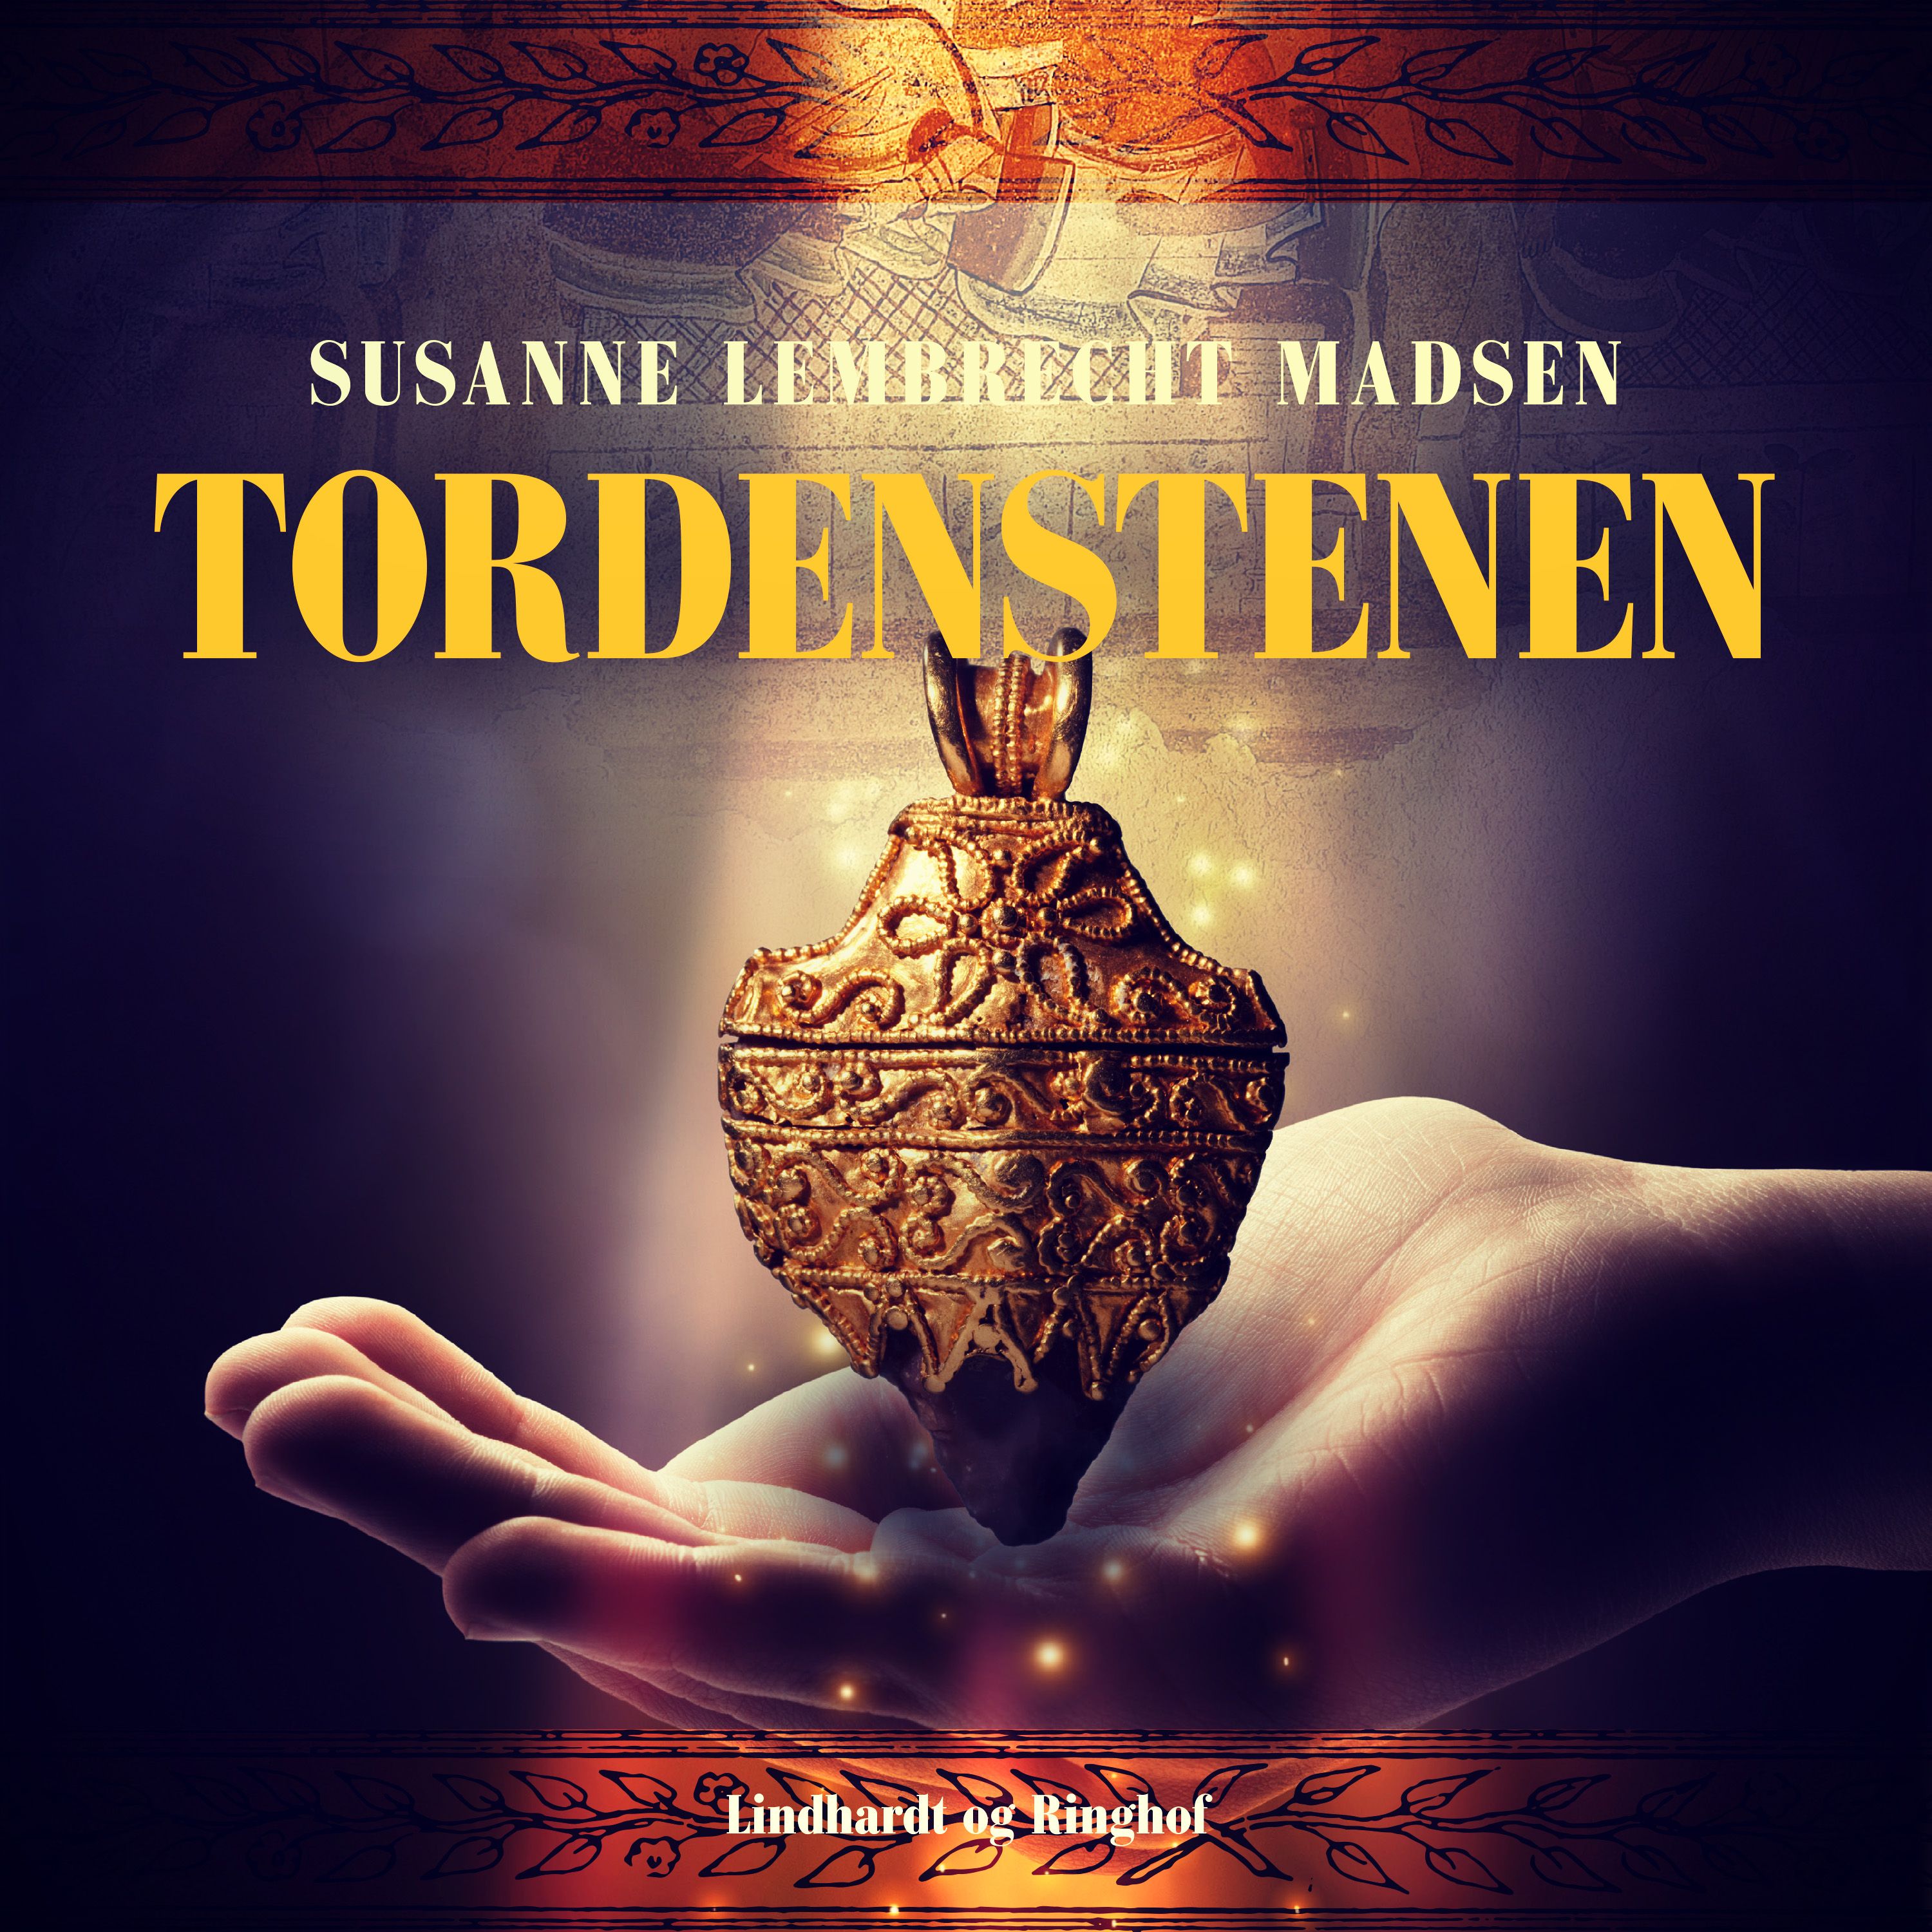 Tordenstenen, lydbog af Susanne Lembrecht Madsen